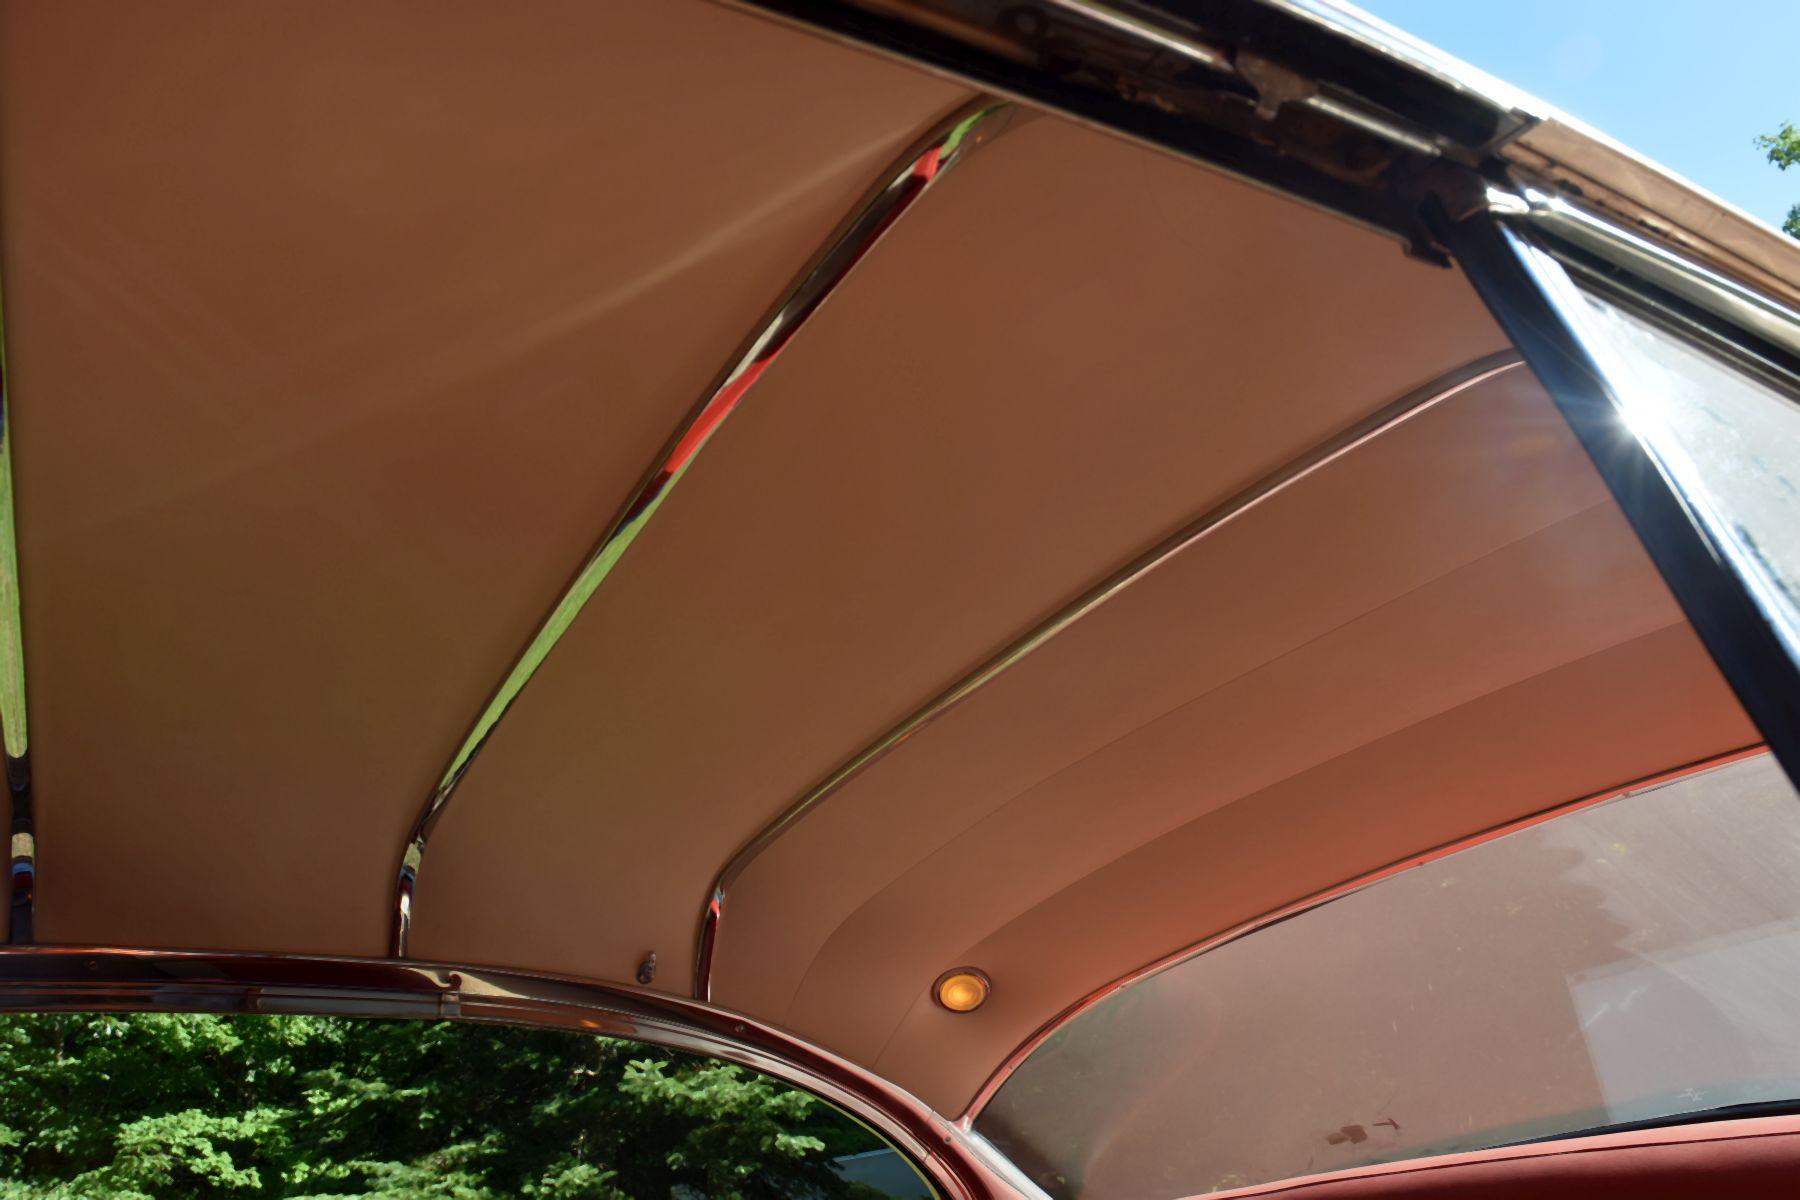 1955 Chevy Belair 2-Door Hardtop, Red & White, 2 Tone Matching Interior, 265V8, 3 Speed Stick, 2652